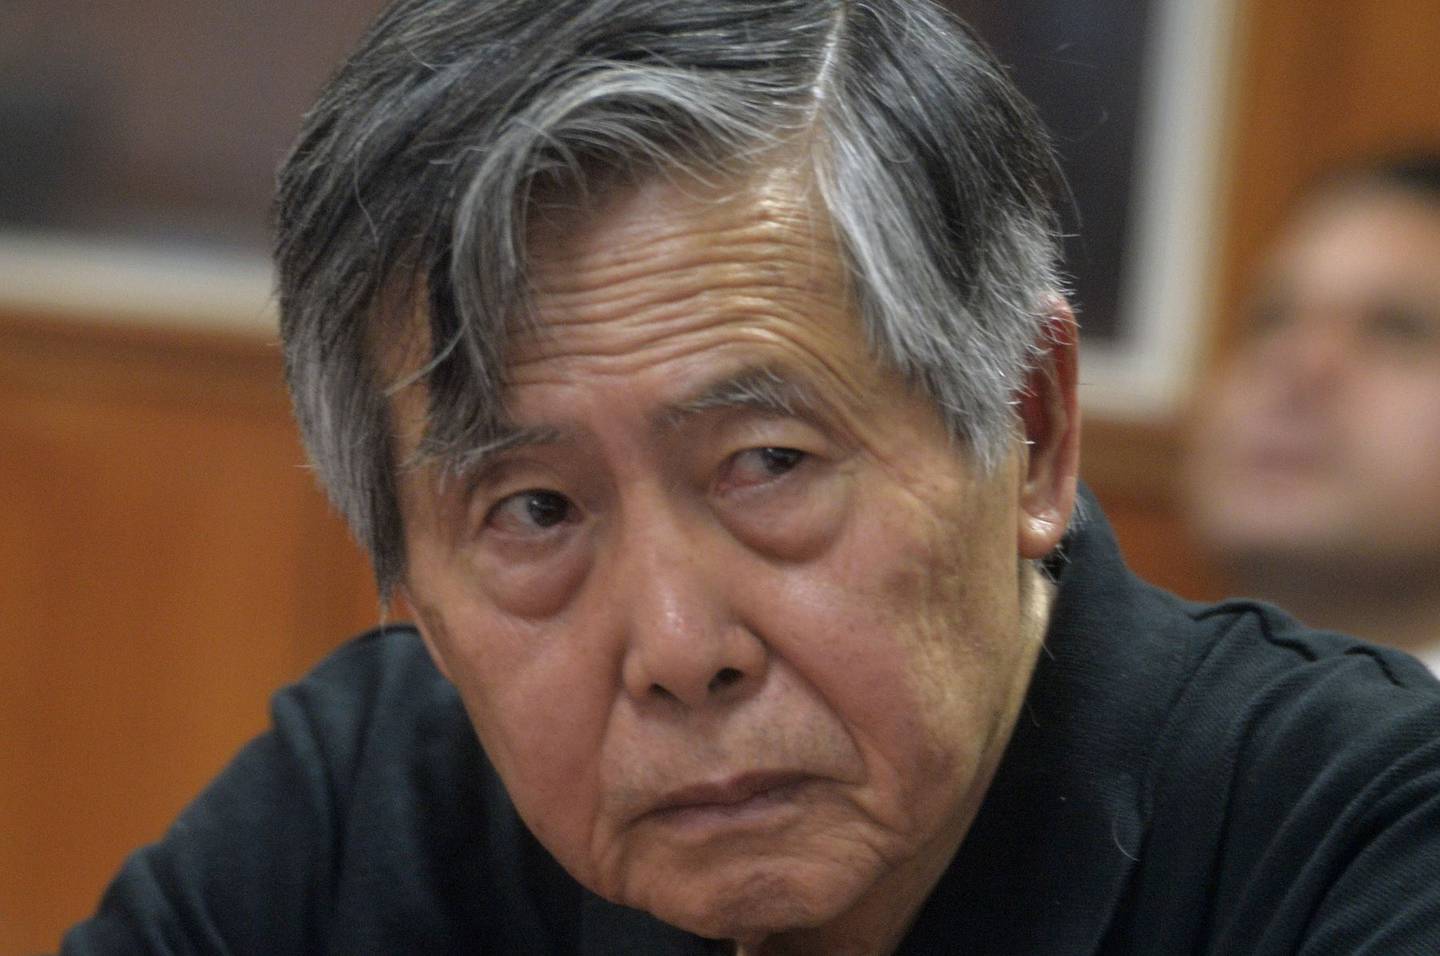 Tribunal de Perú aprueba recurso para que expresidente Alberto Fujimori salga de prisióndfd